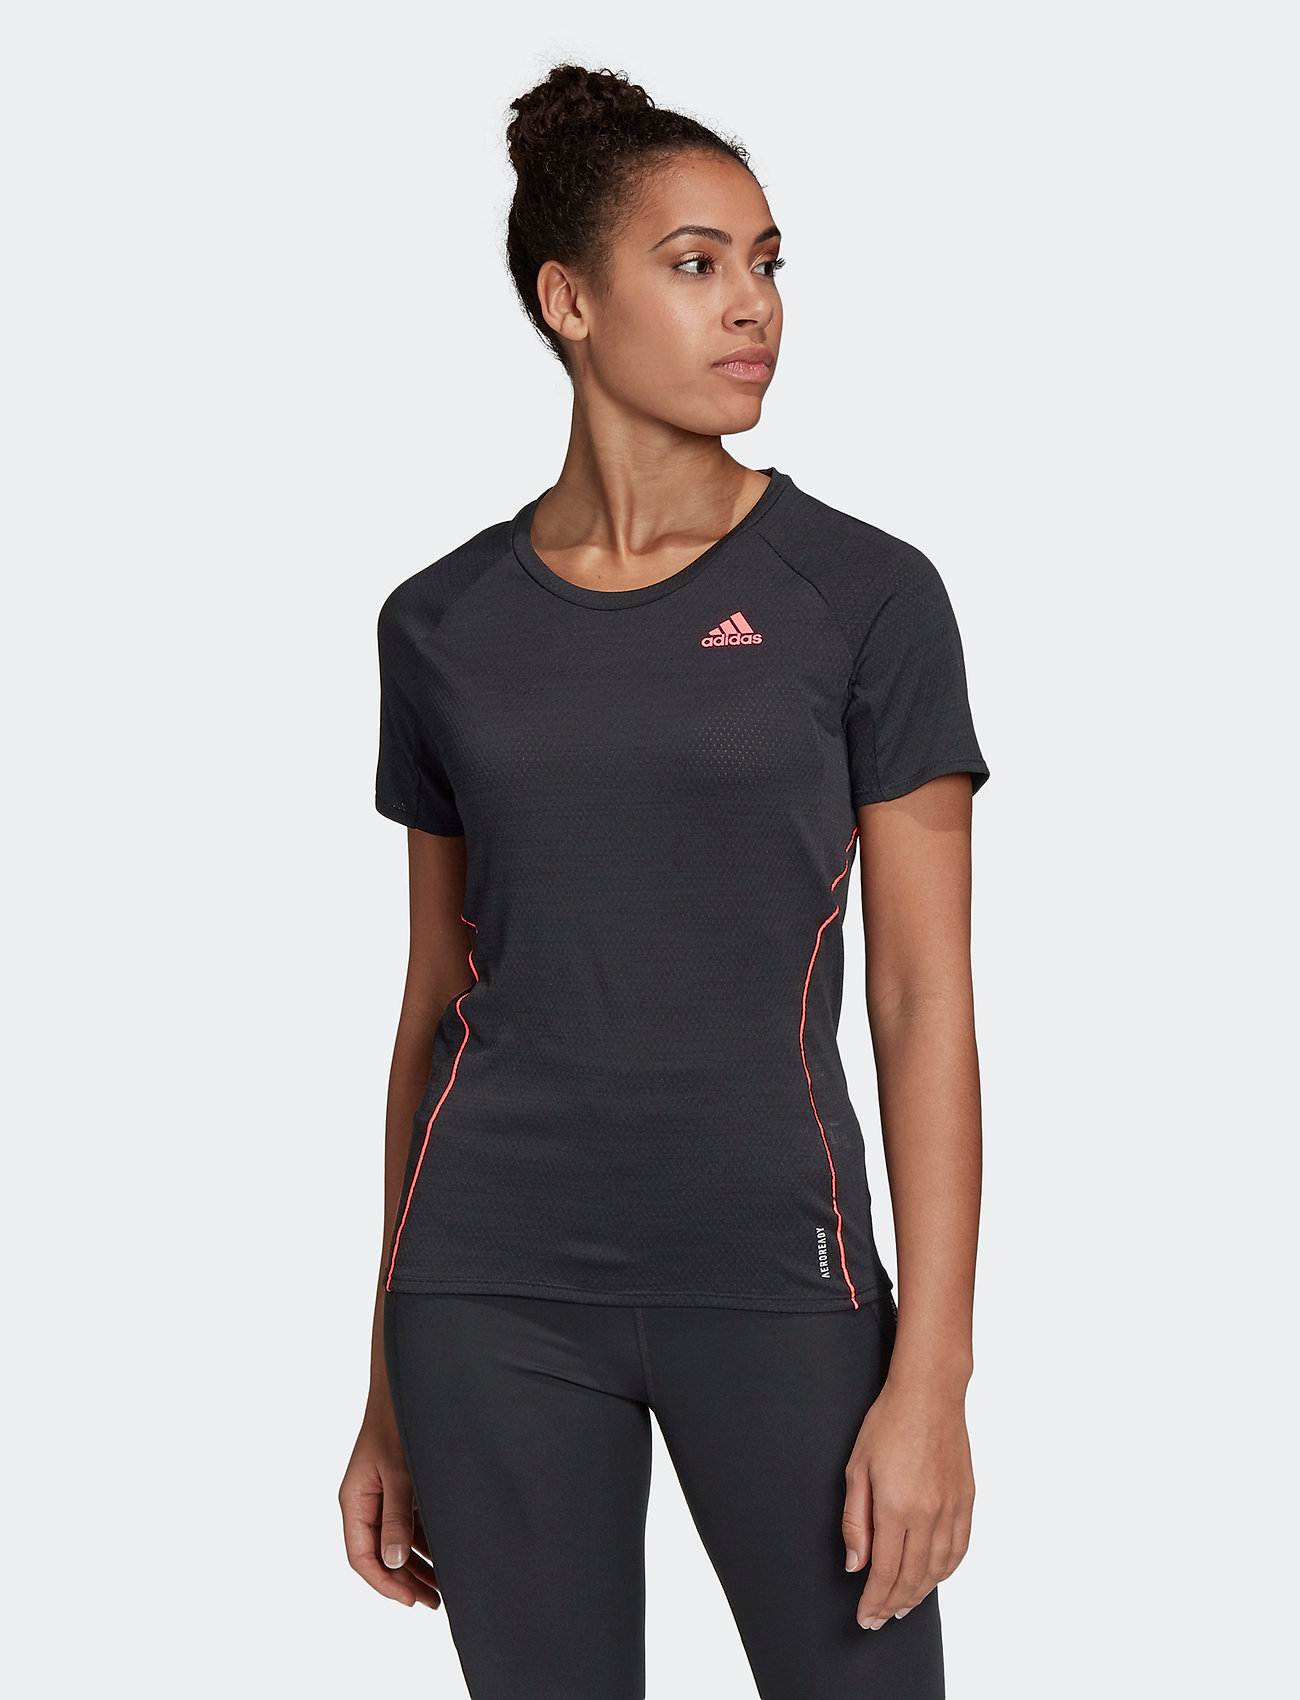 adidas Performance Adi Runner Tee - T-shirts & Tops | Boozt.com